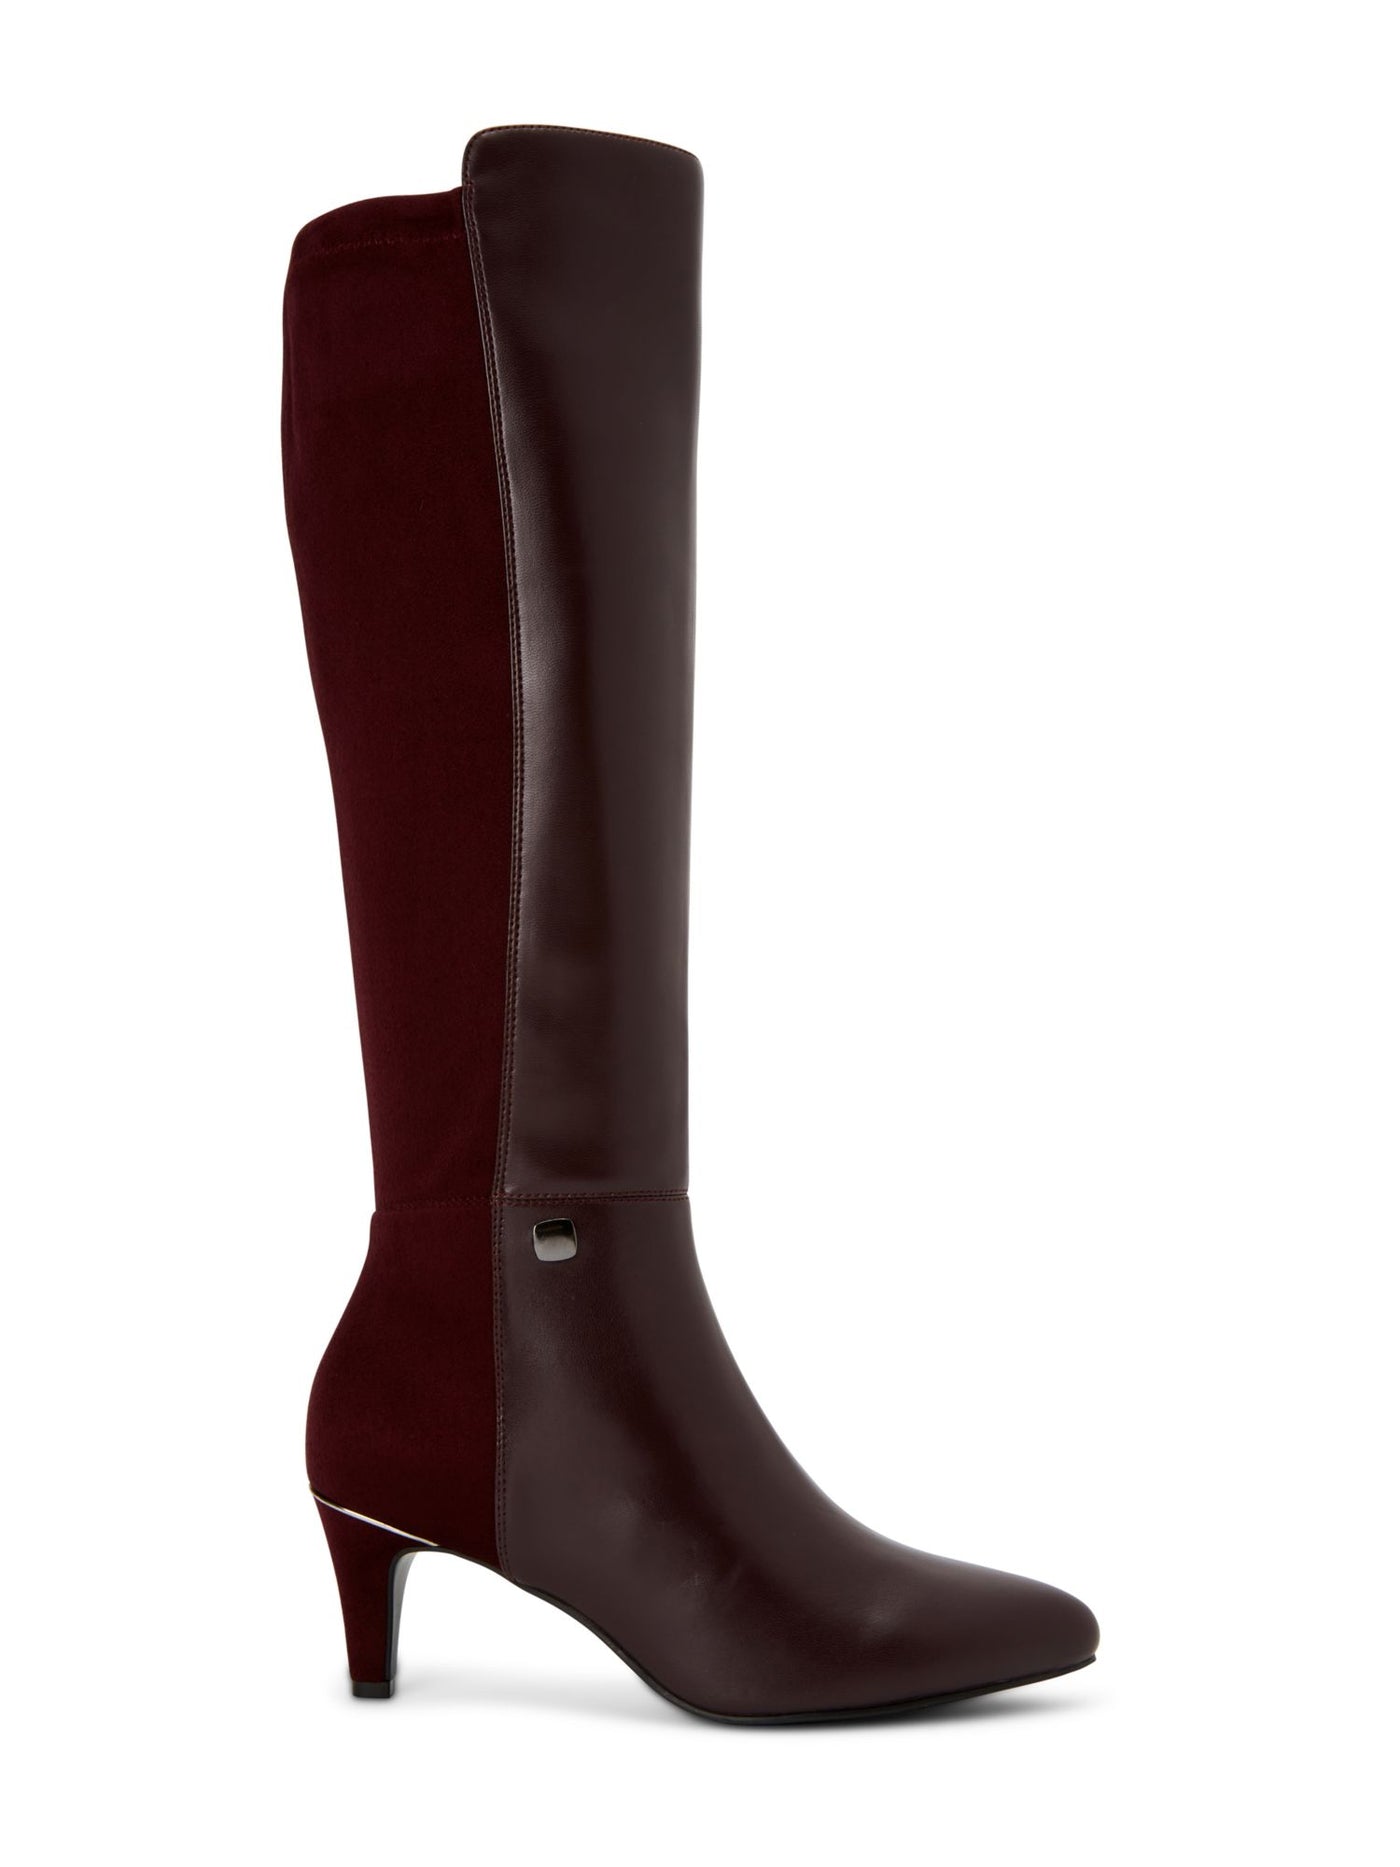 ALFANI Womens Burgundy Arch Support Cushioned Hakuu Almond Toe Kitten Heel Zip-Up Boots Shoes 11 M